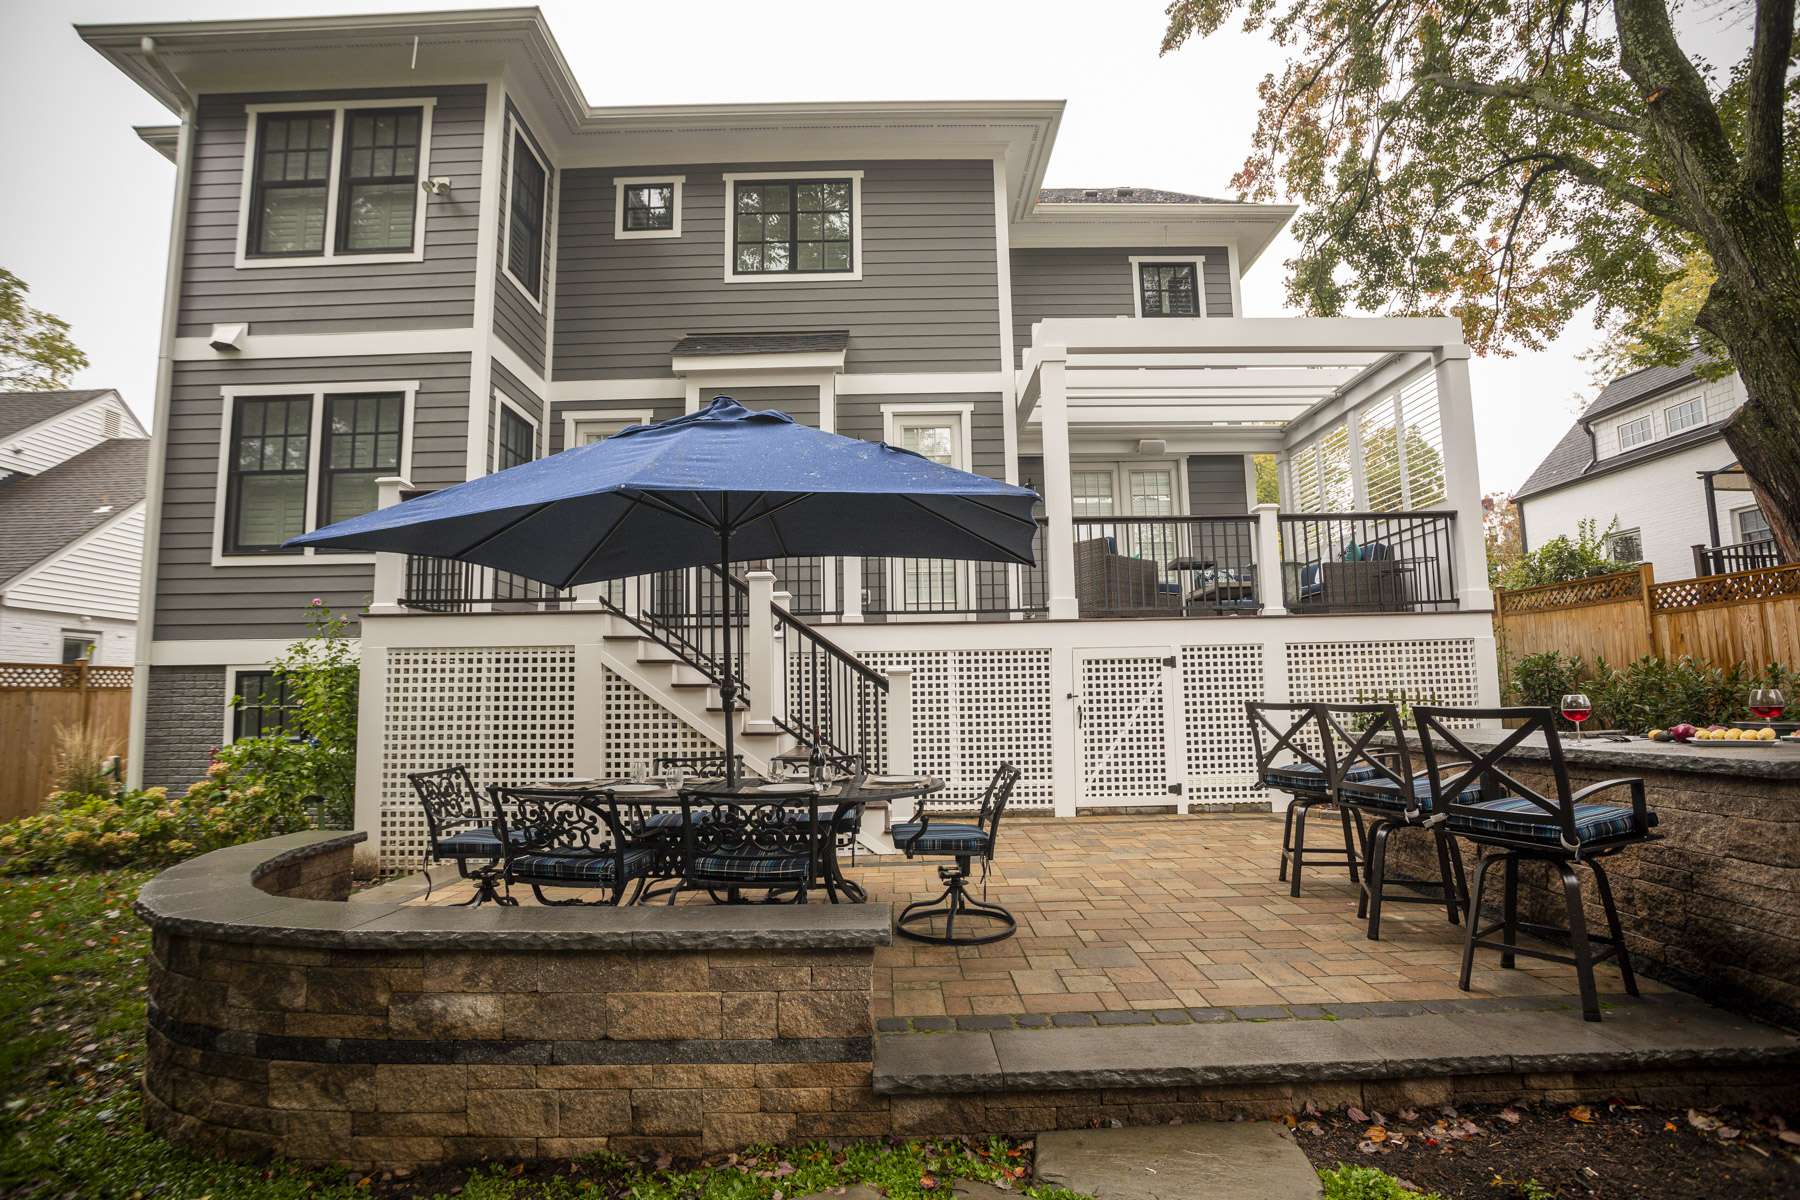 Kingstowne paver patio deck seating outdoor kitchen yard